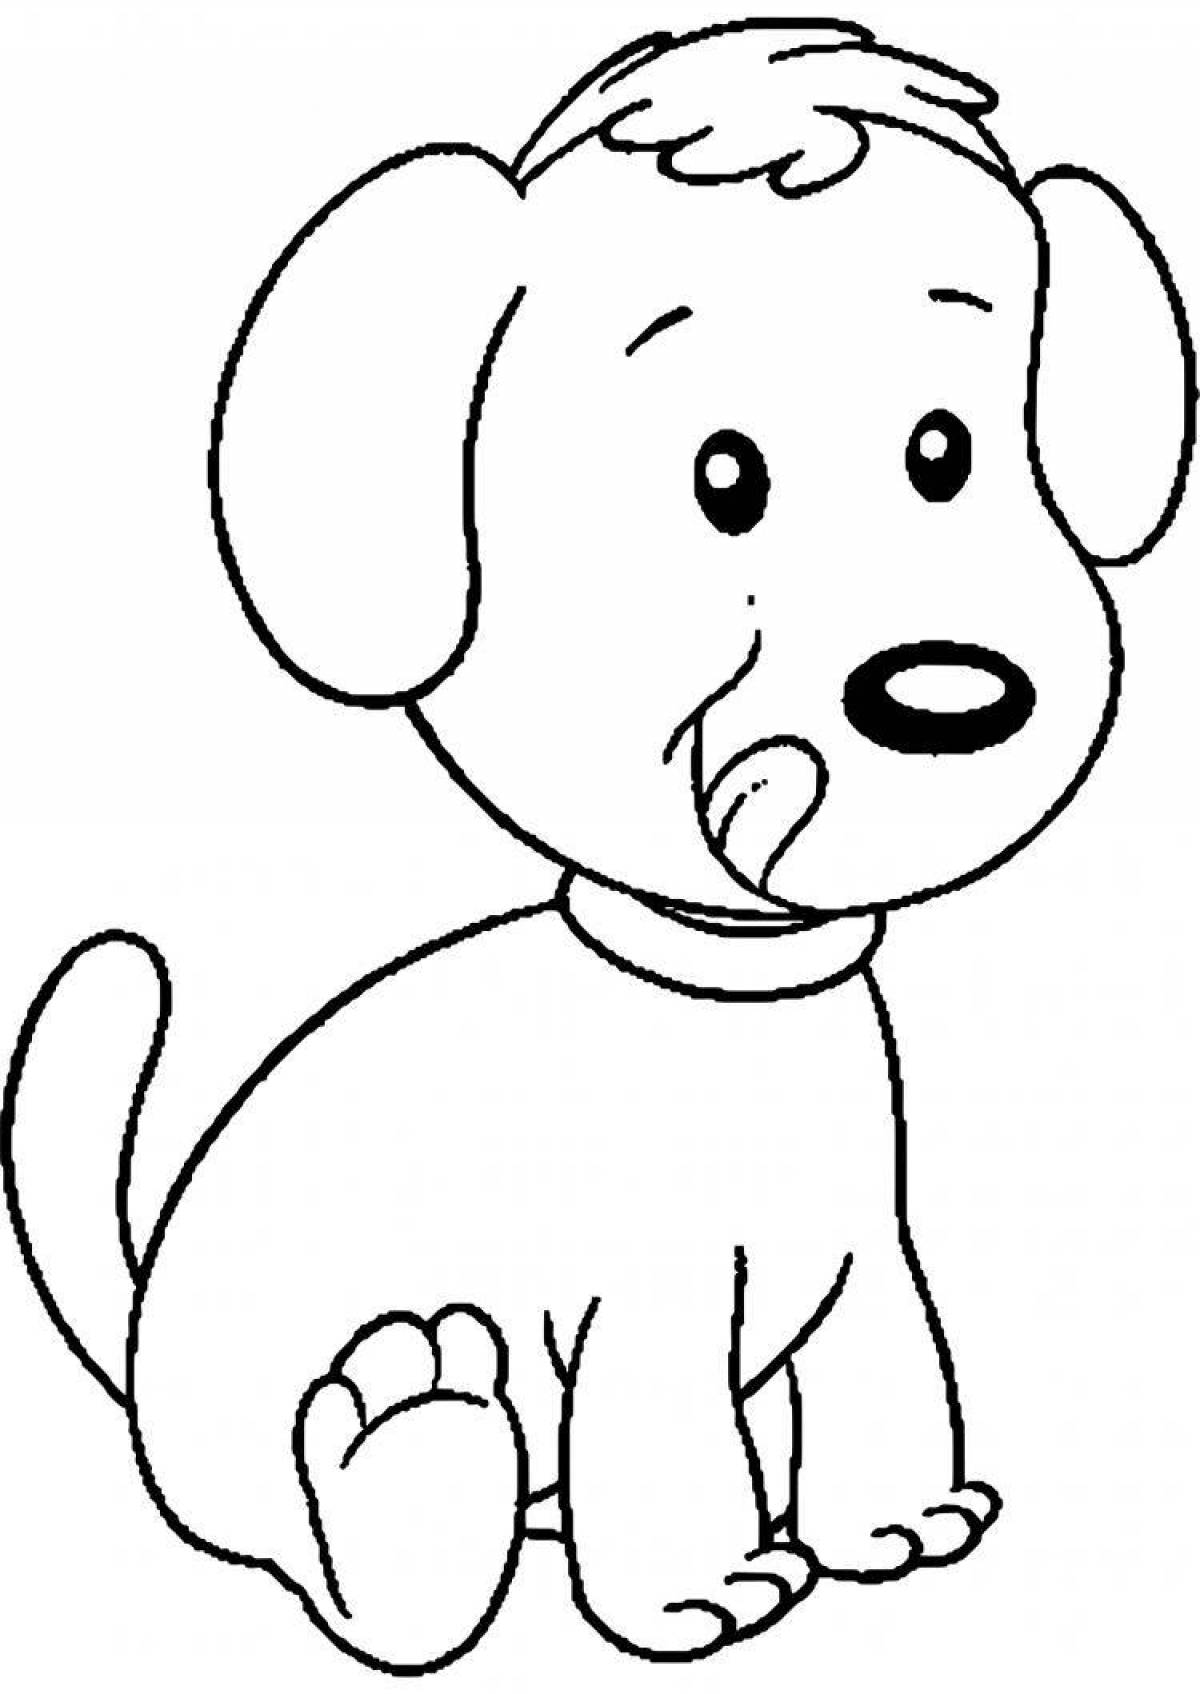 Wiggly coloring page dog для детей